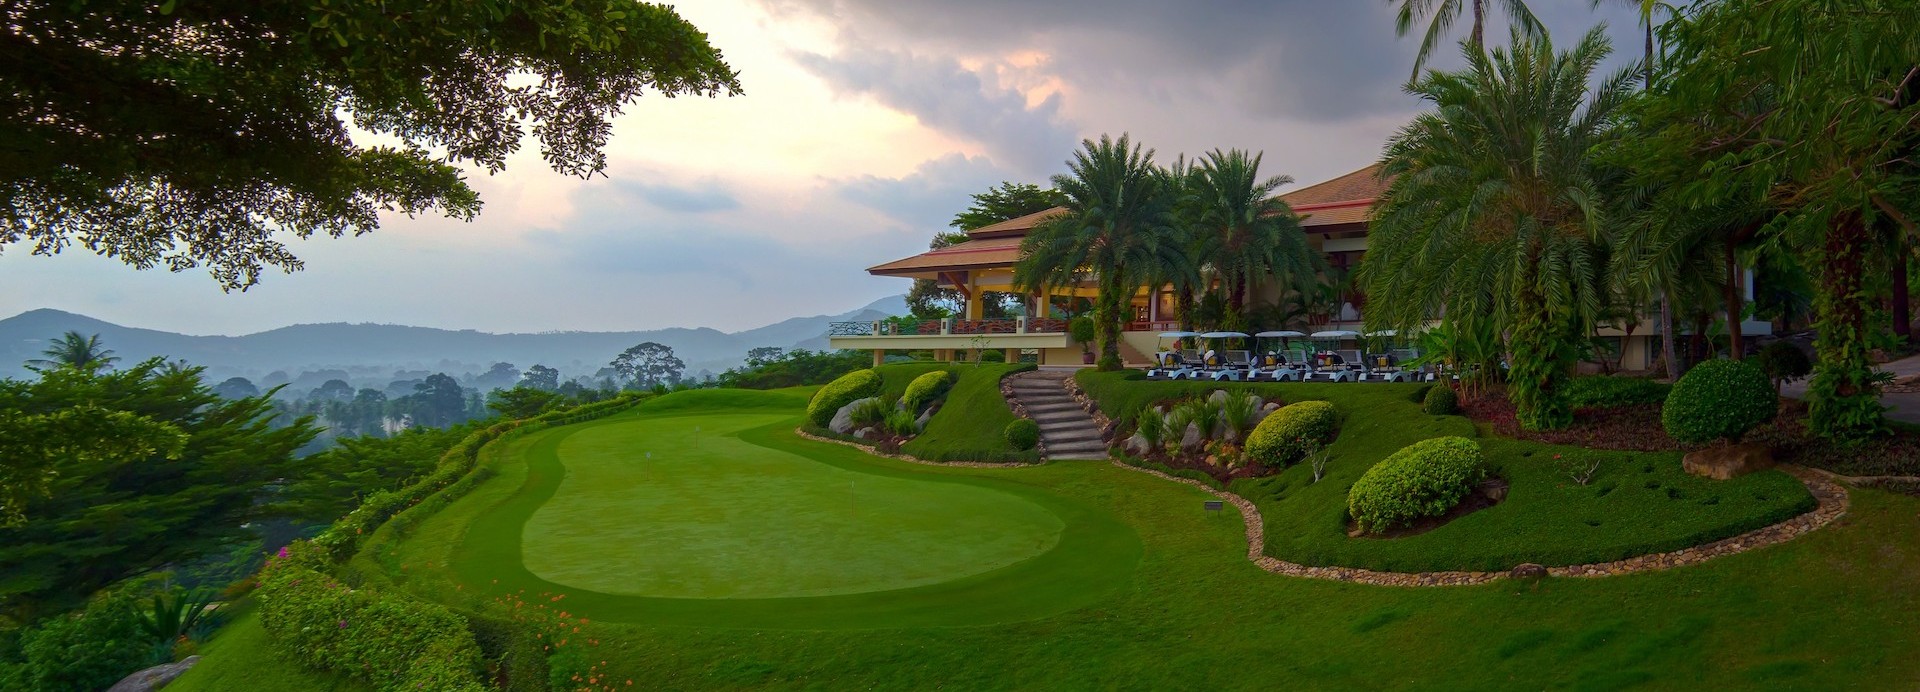 Santiburi Samui Country Club  | Golfové zájezdy, golfová dovolená, luxusní golf